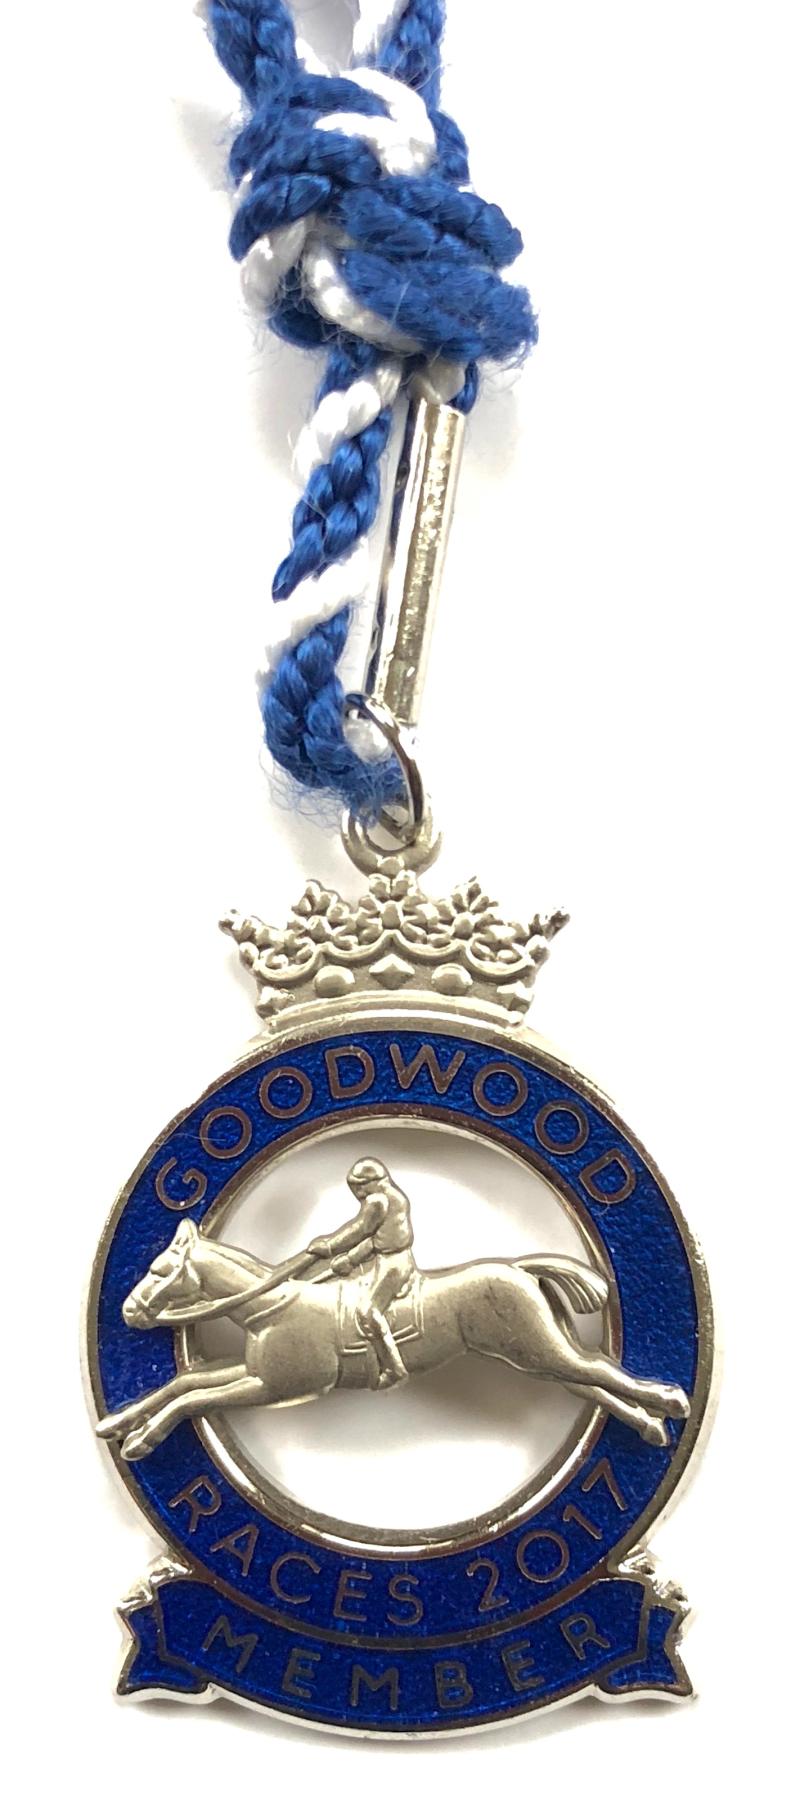 2017 Goodwood Racecourse horse racing club member badge